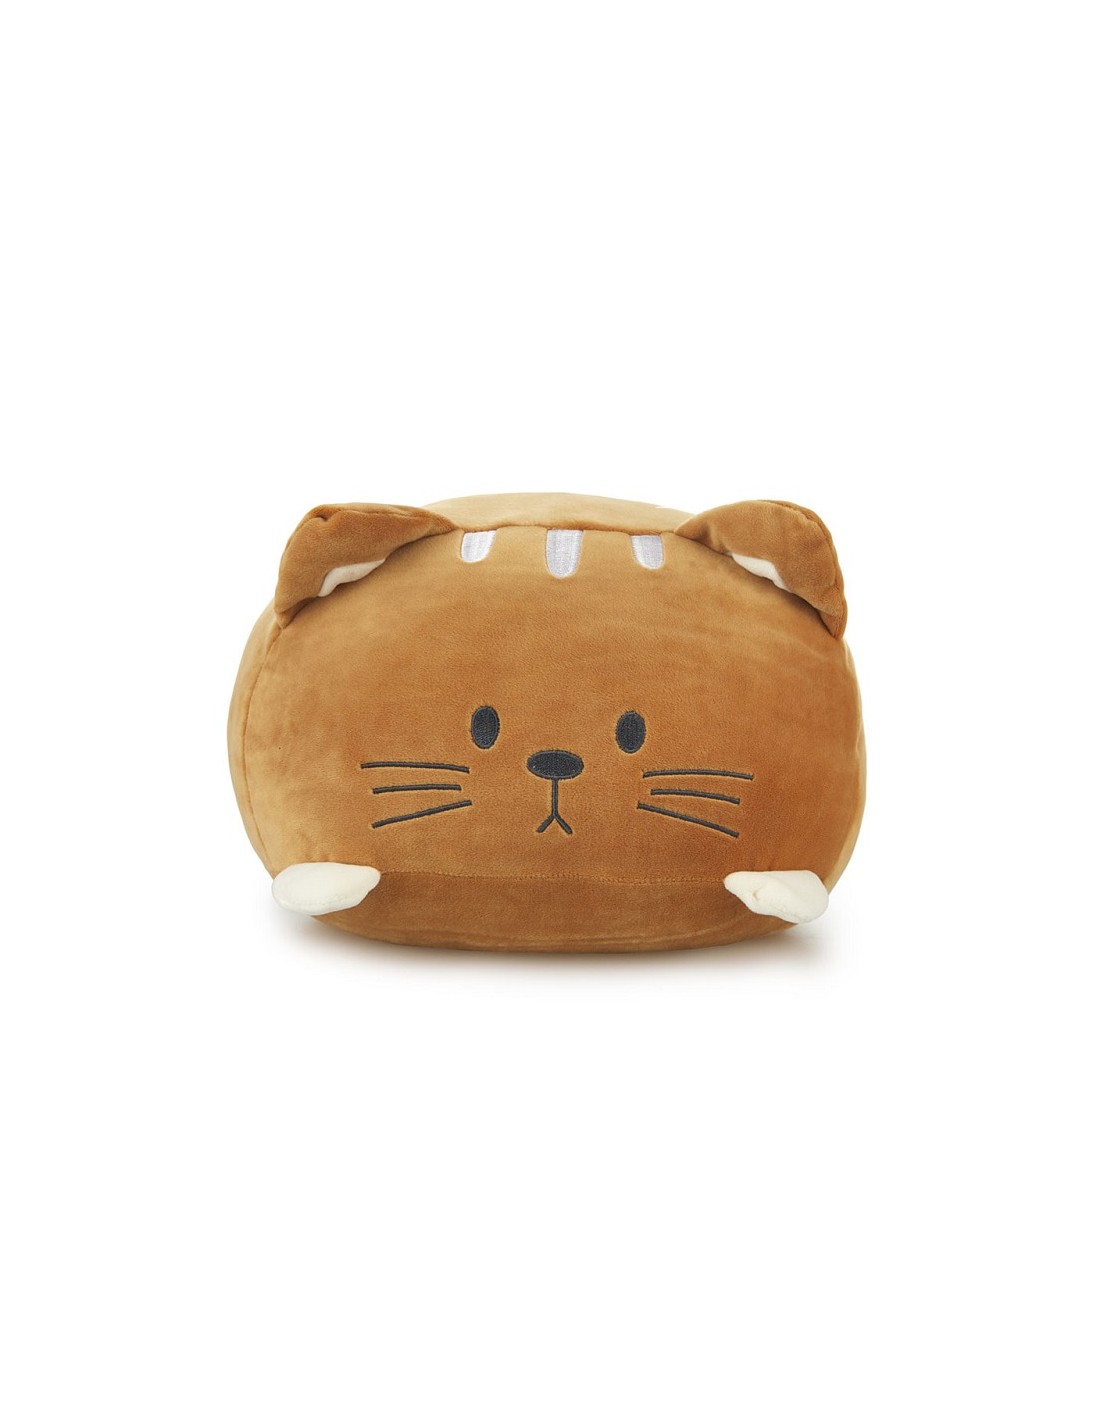 Cuscino morbido a forma di gatto marrone cm 30 - KITTY by Balvi